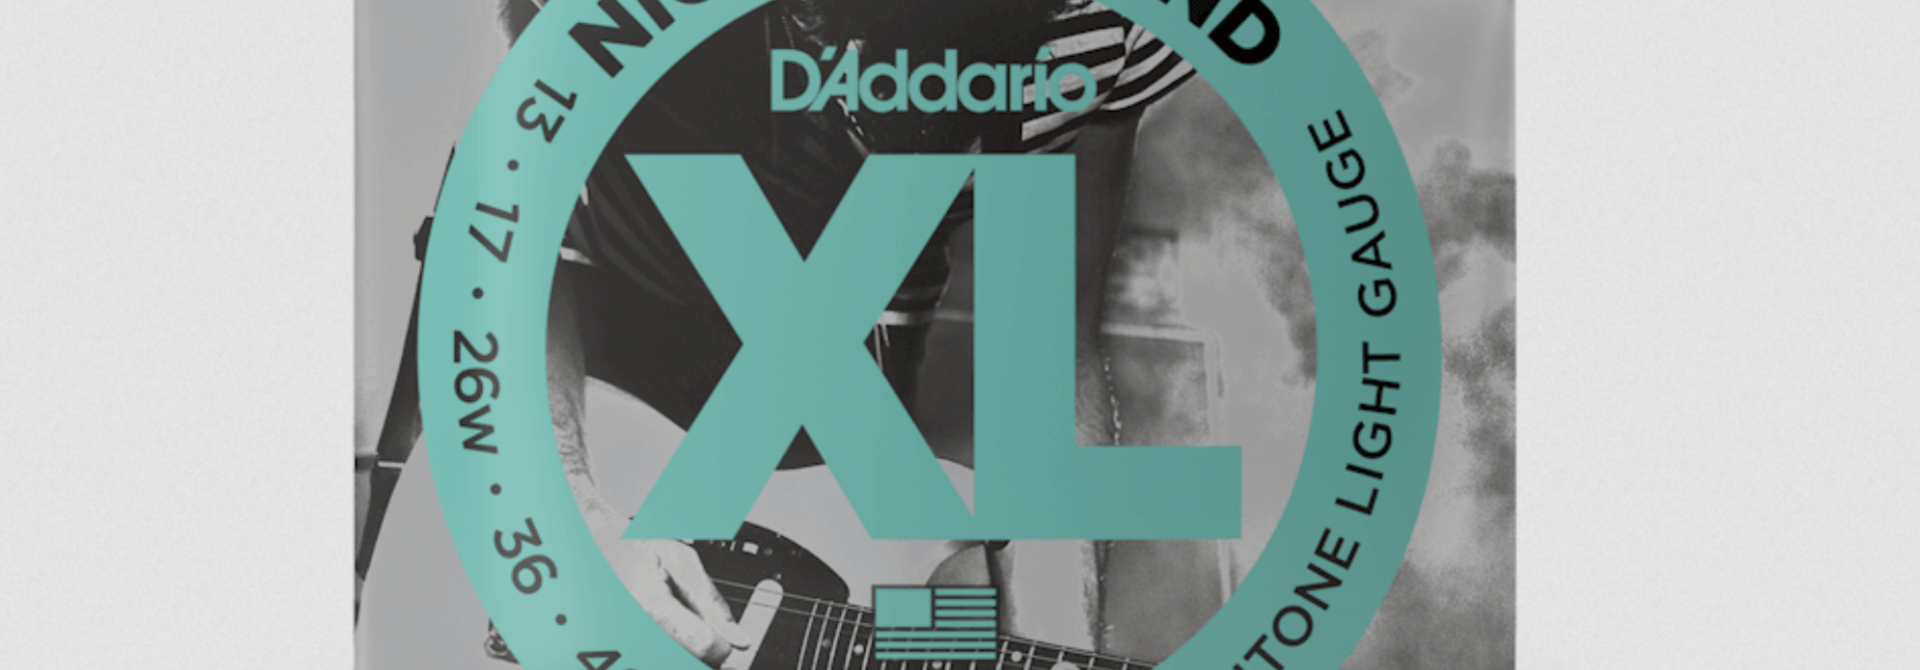 D'addario EXL158 13-62 Light Baritone, XL Nickel Electric Guitar Strings